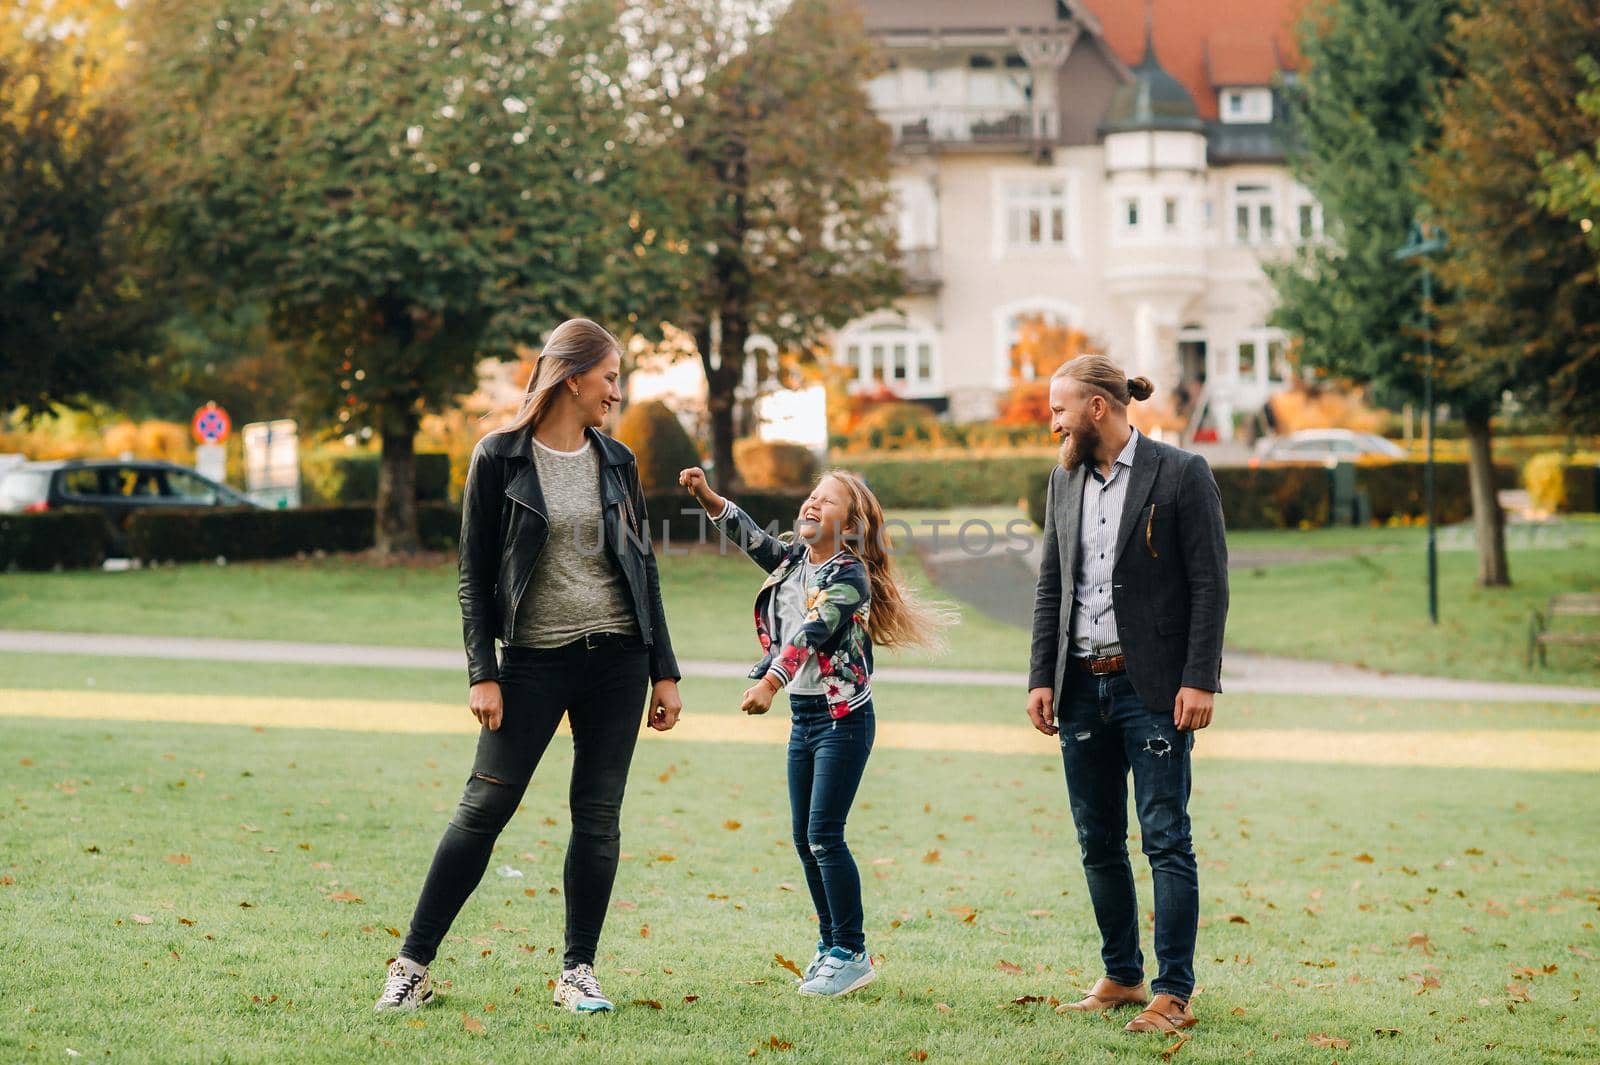 A happy family of three runs through the grass in Austria's old town.A family walks through a small town in Austria.Europe.Velden am werten Zee.